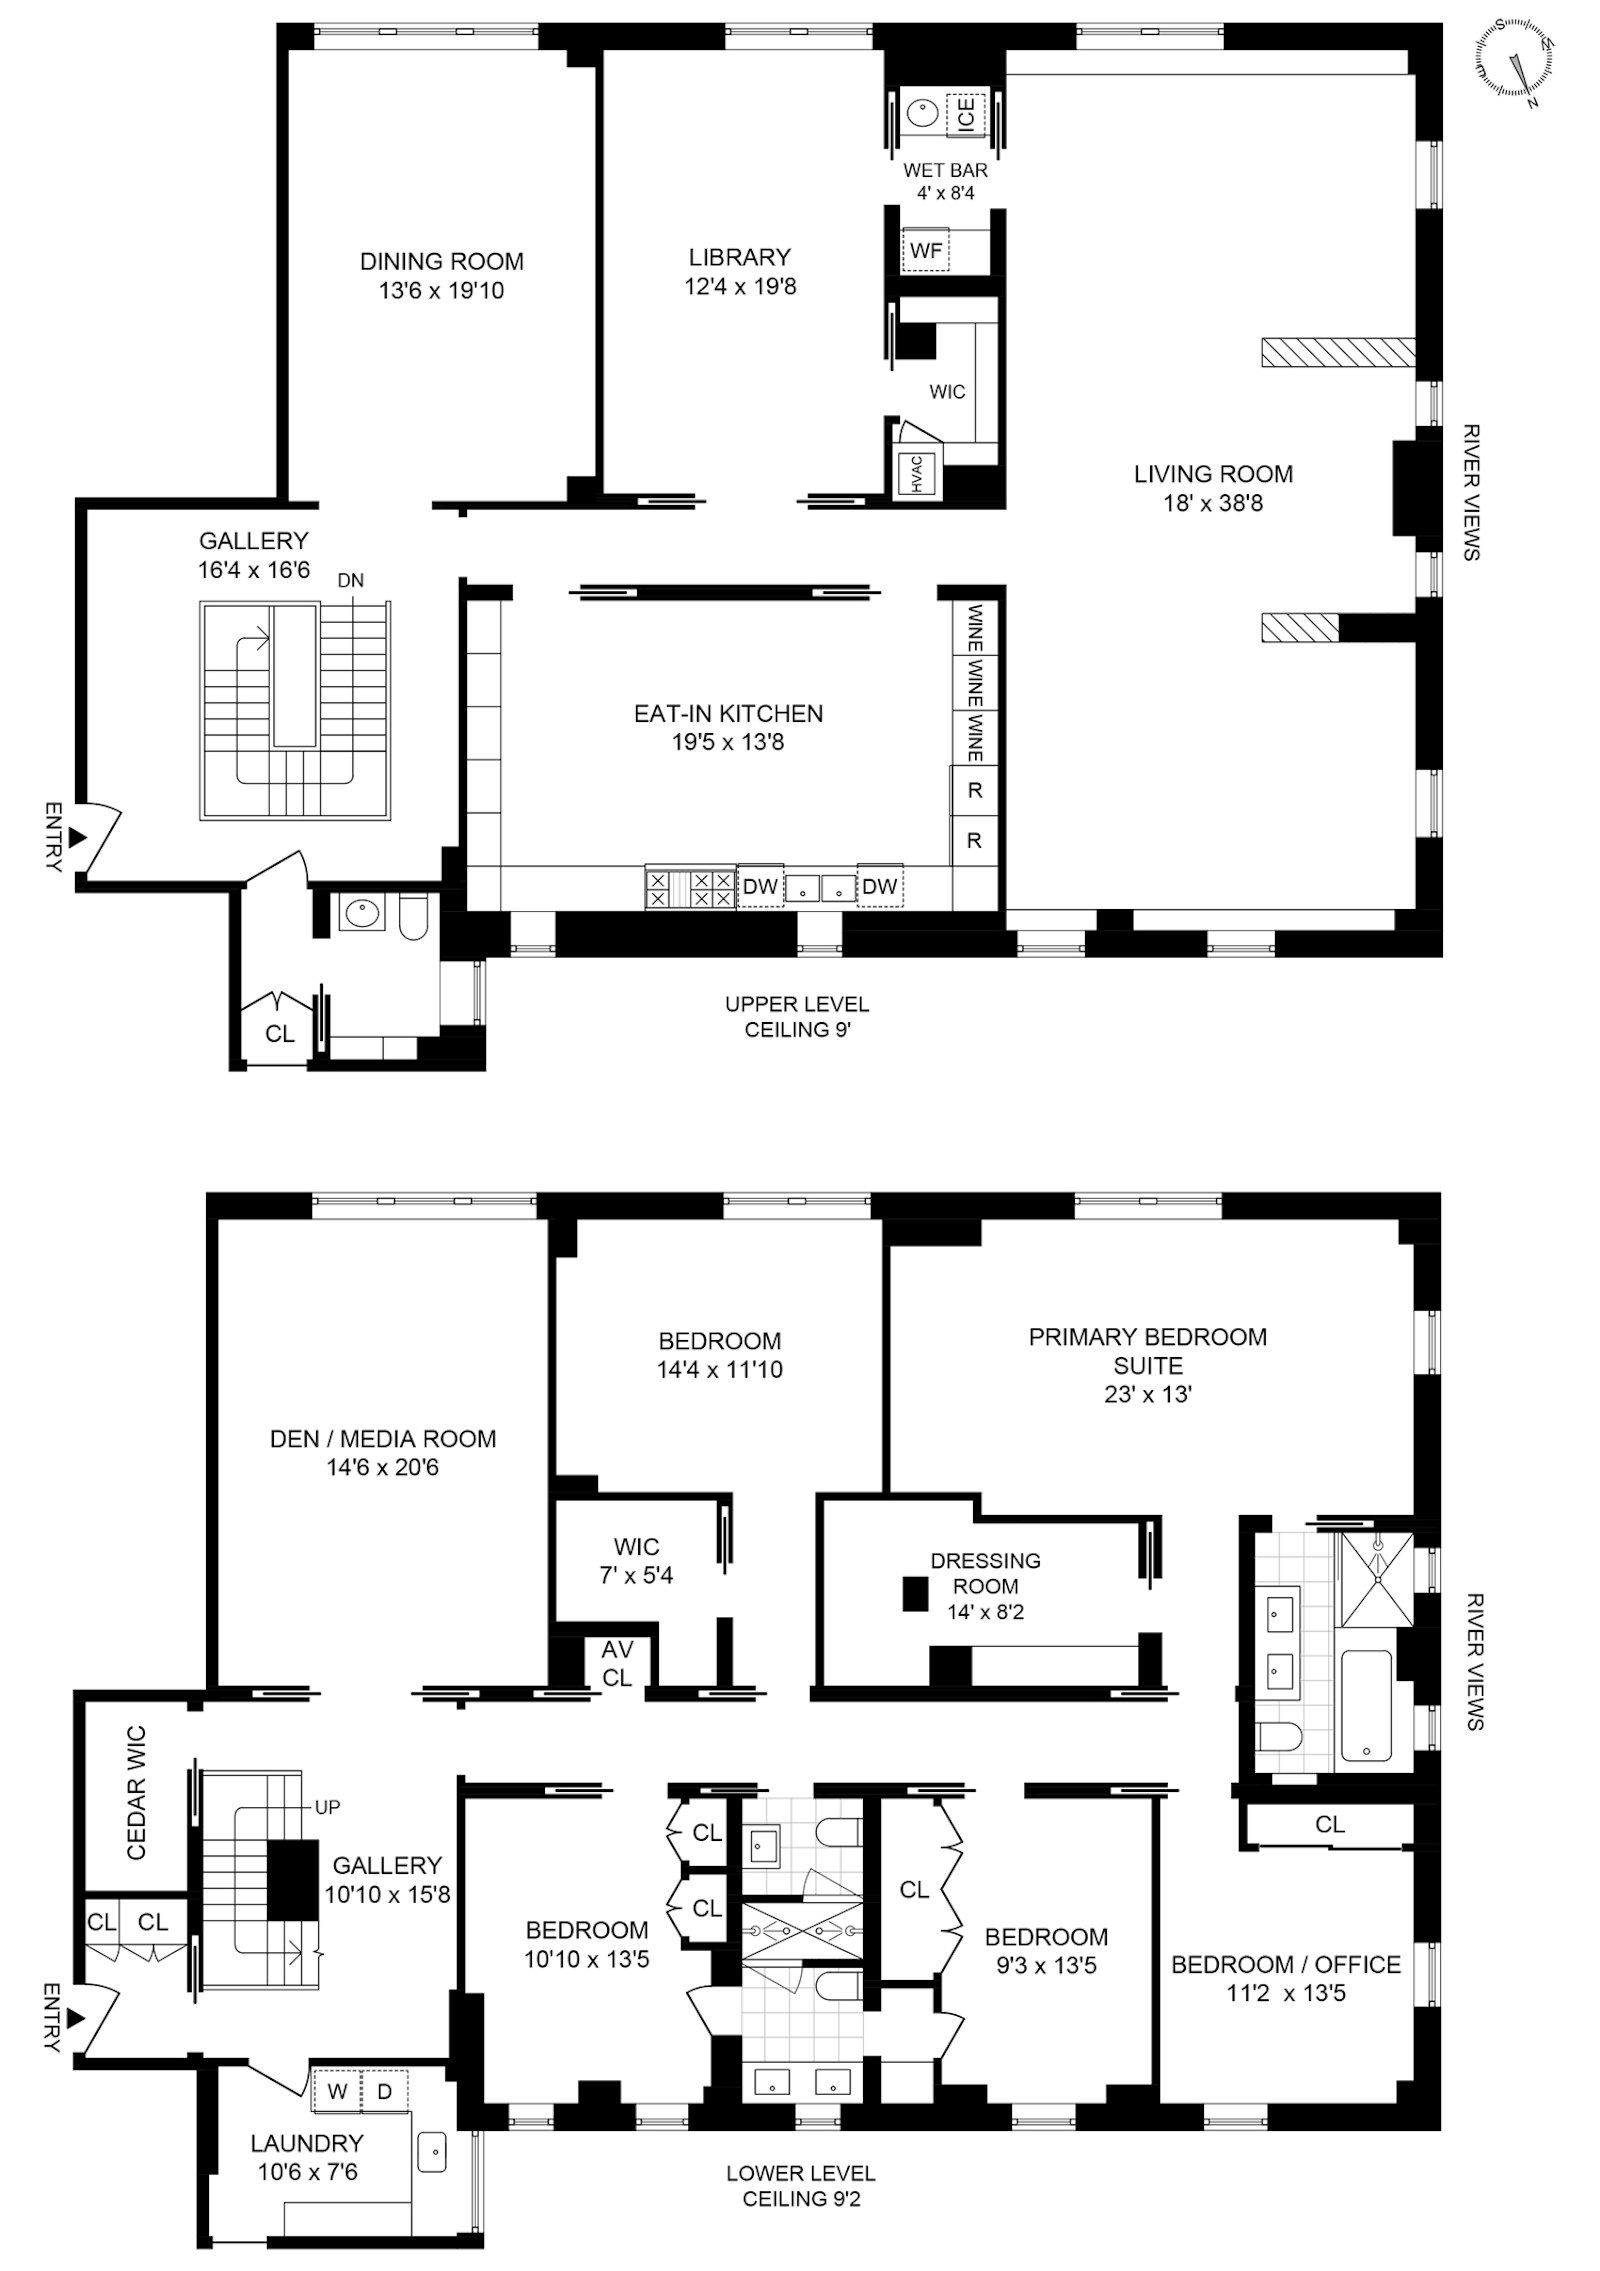 Floorplan for 465 West End Avenue, 10C